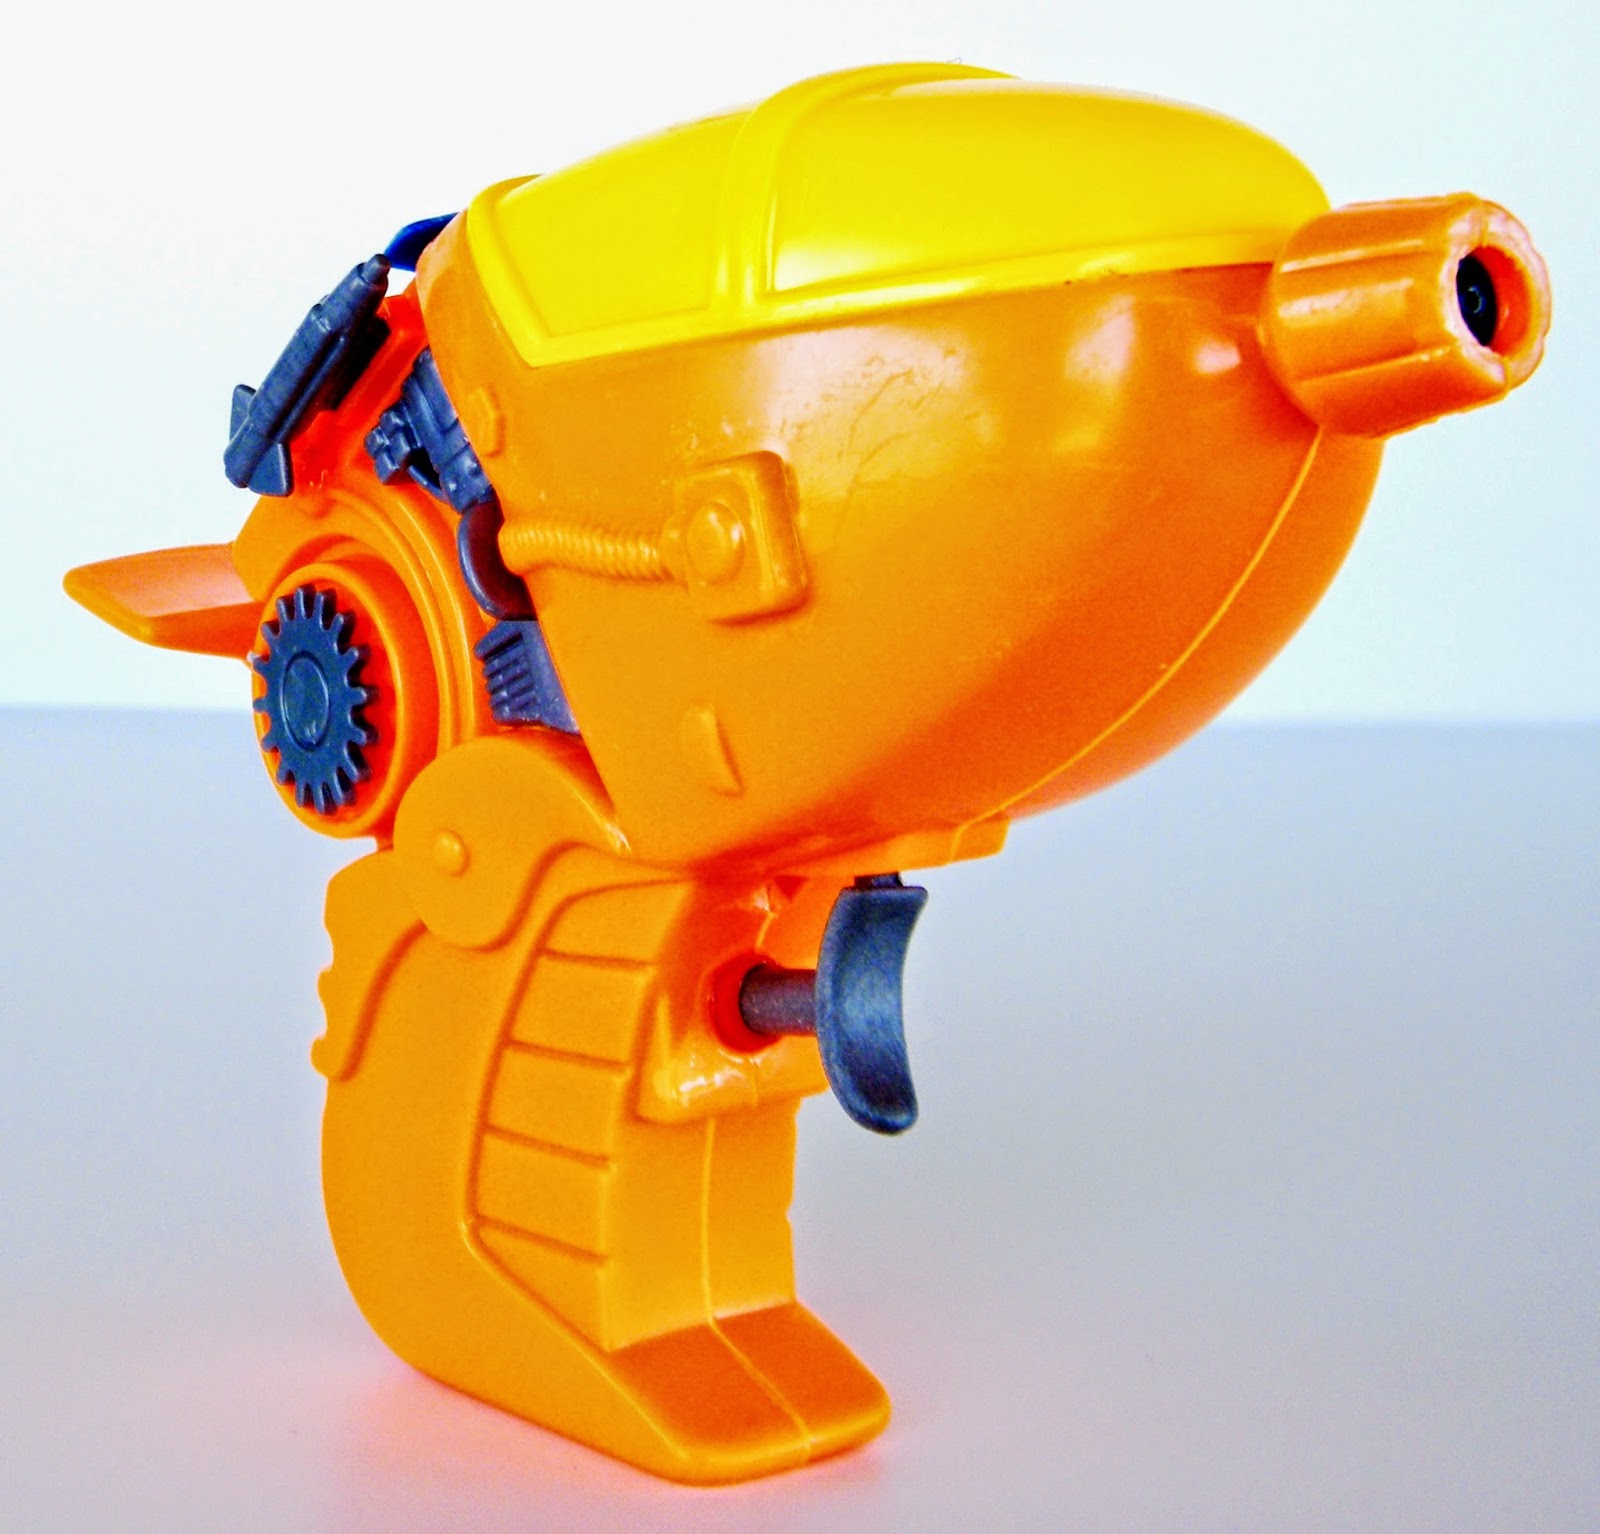 Toys And Stuff Wondertreats Inc Ray Gun Water Pistol